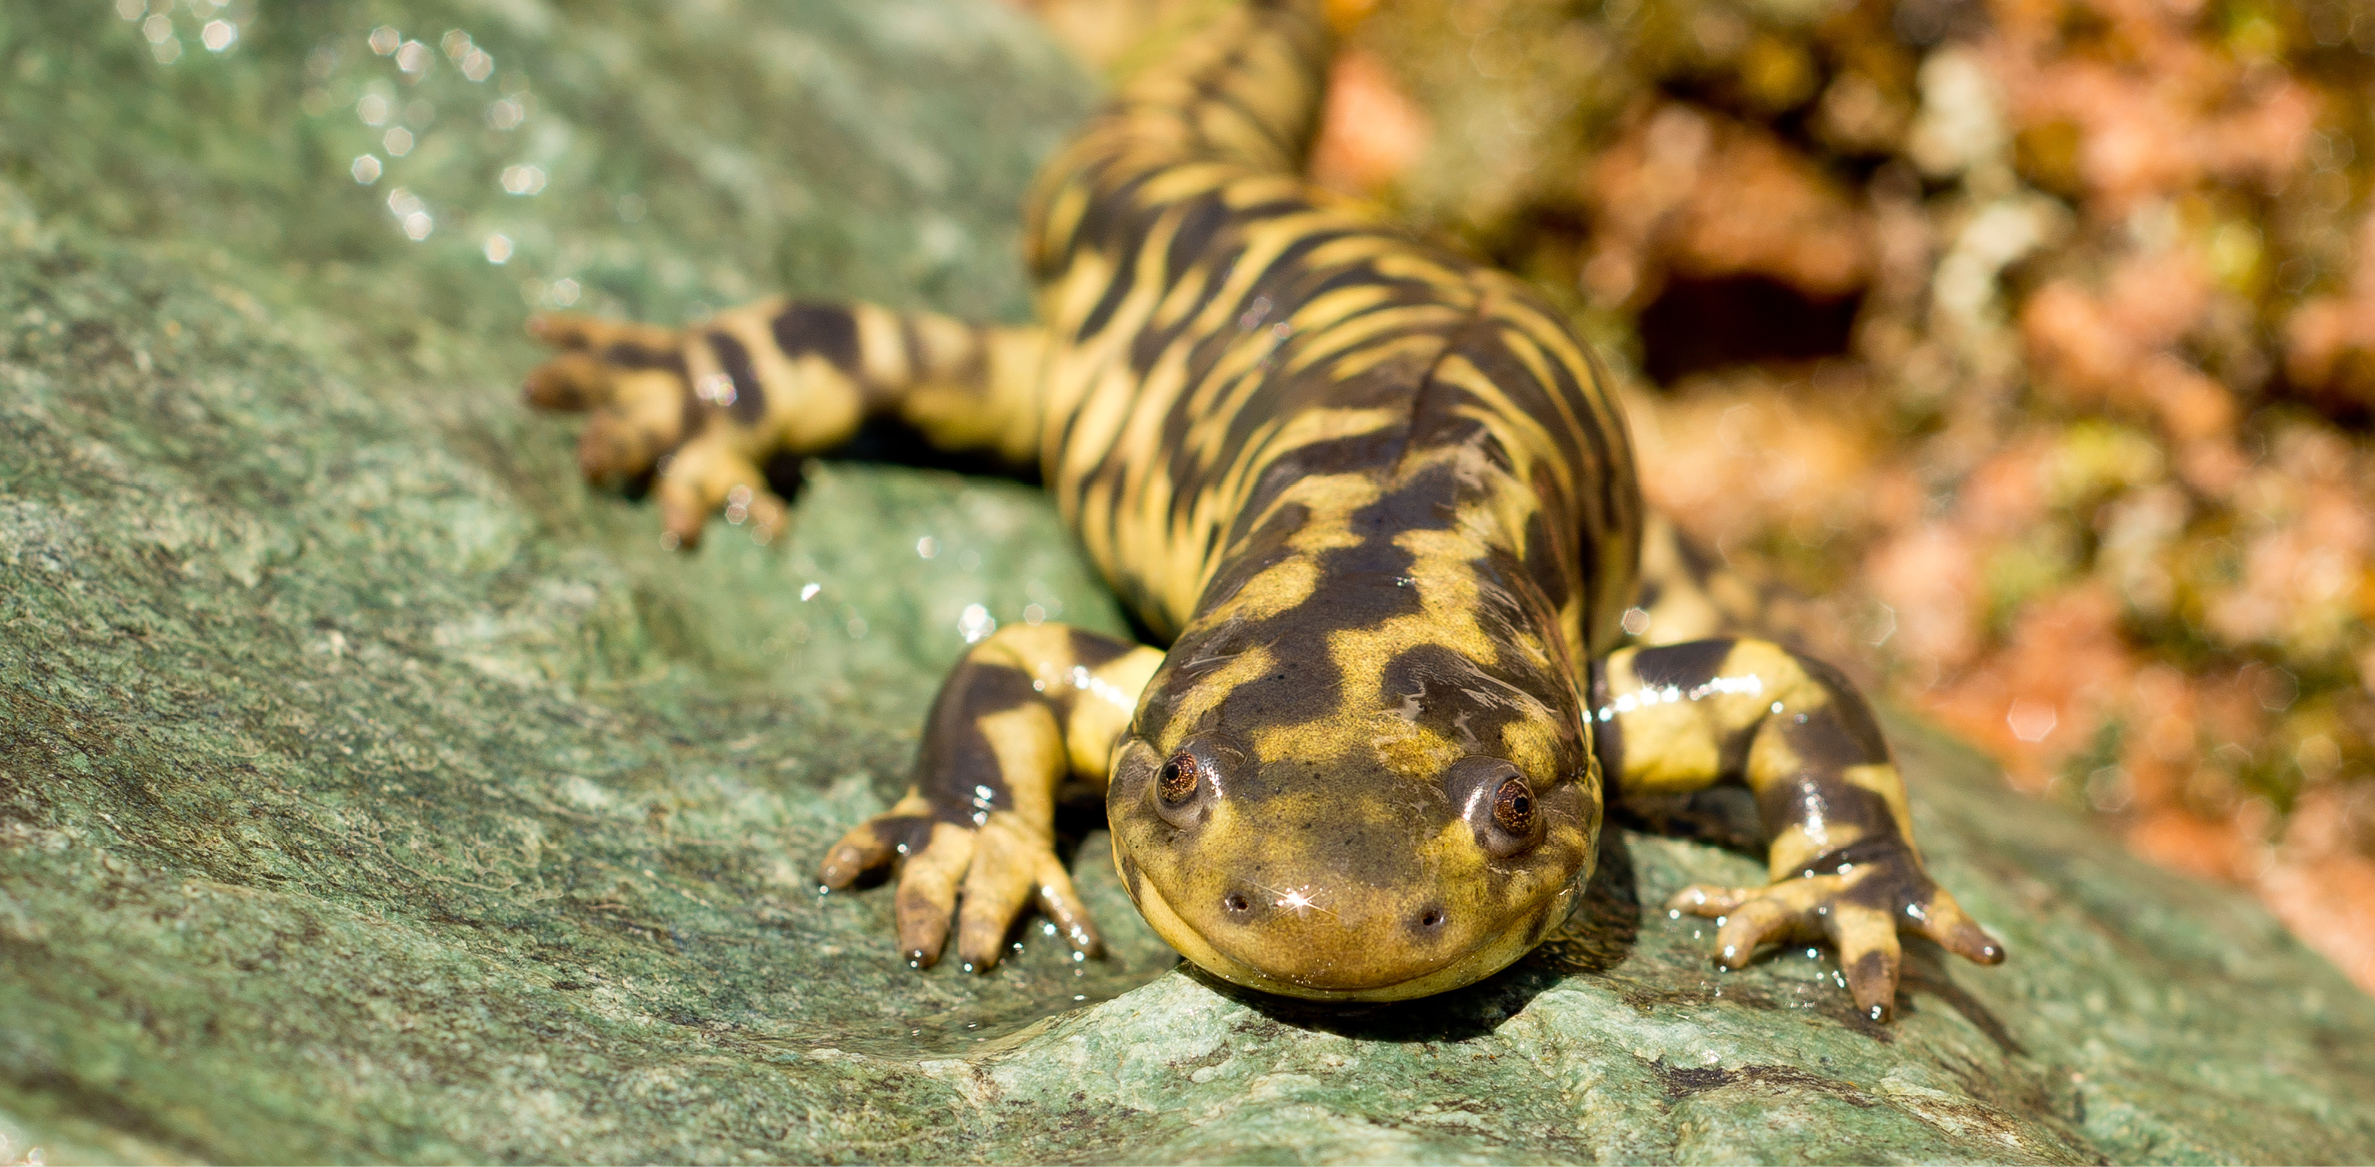 Tiger salamander photo